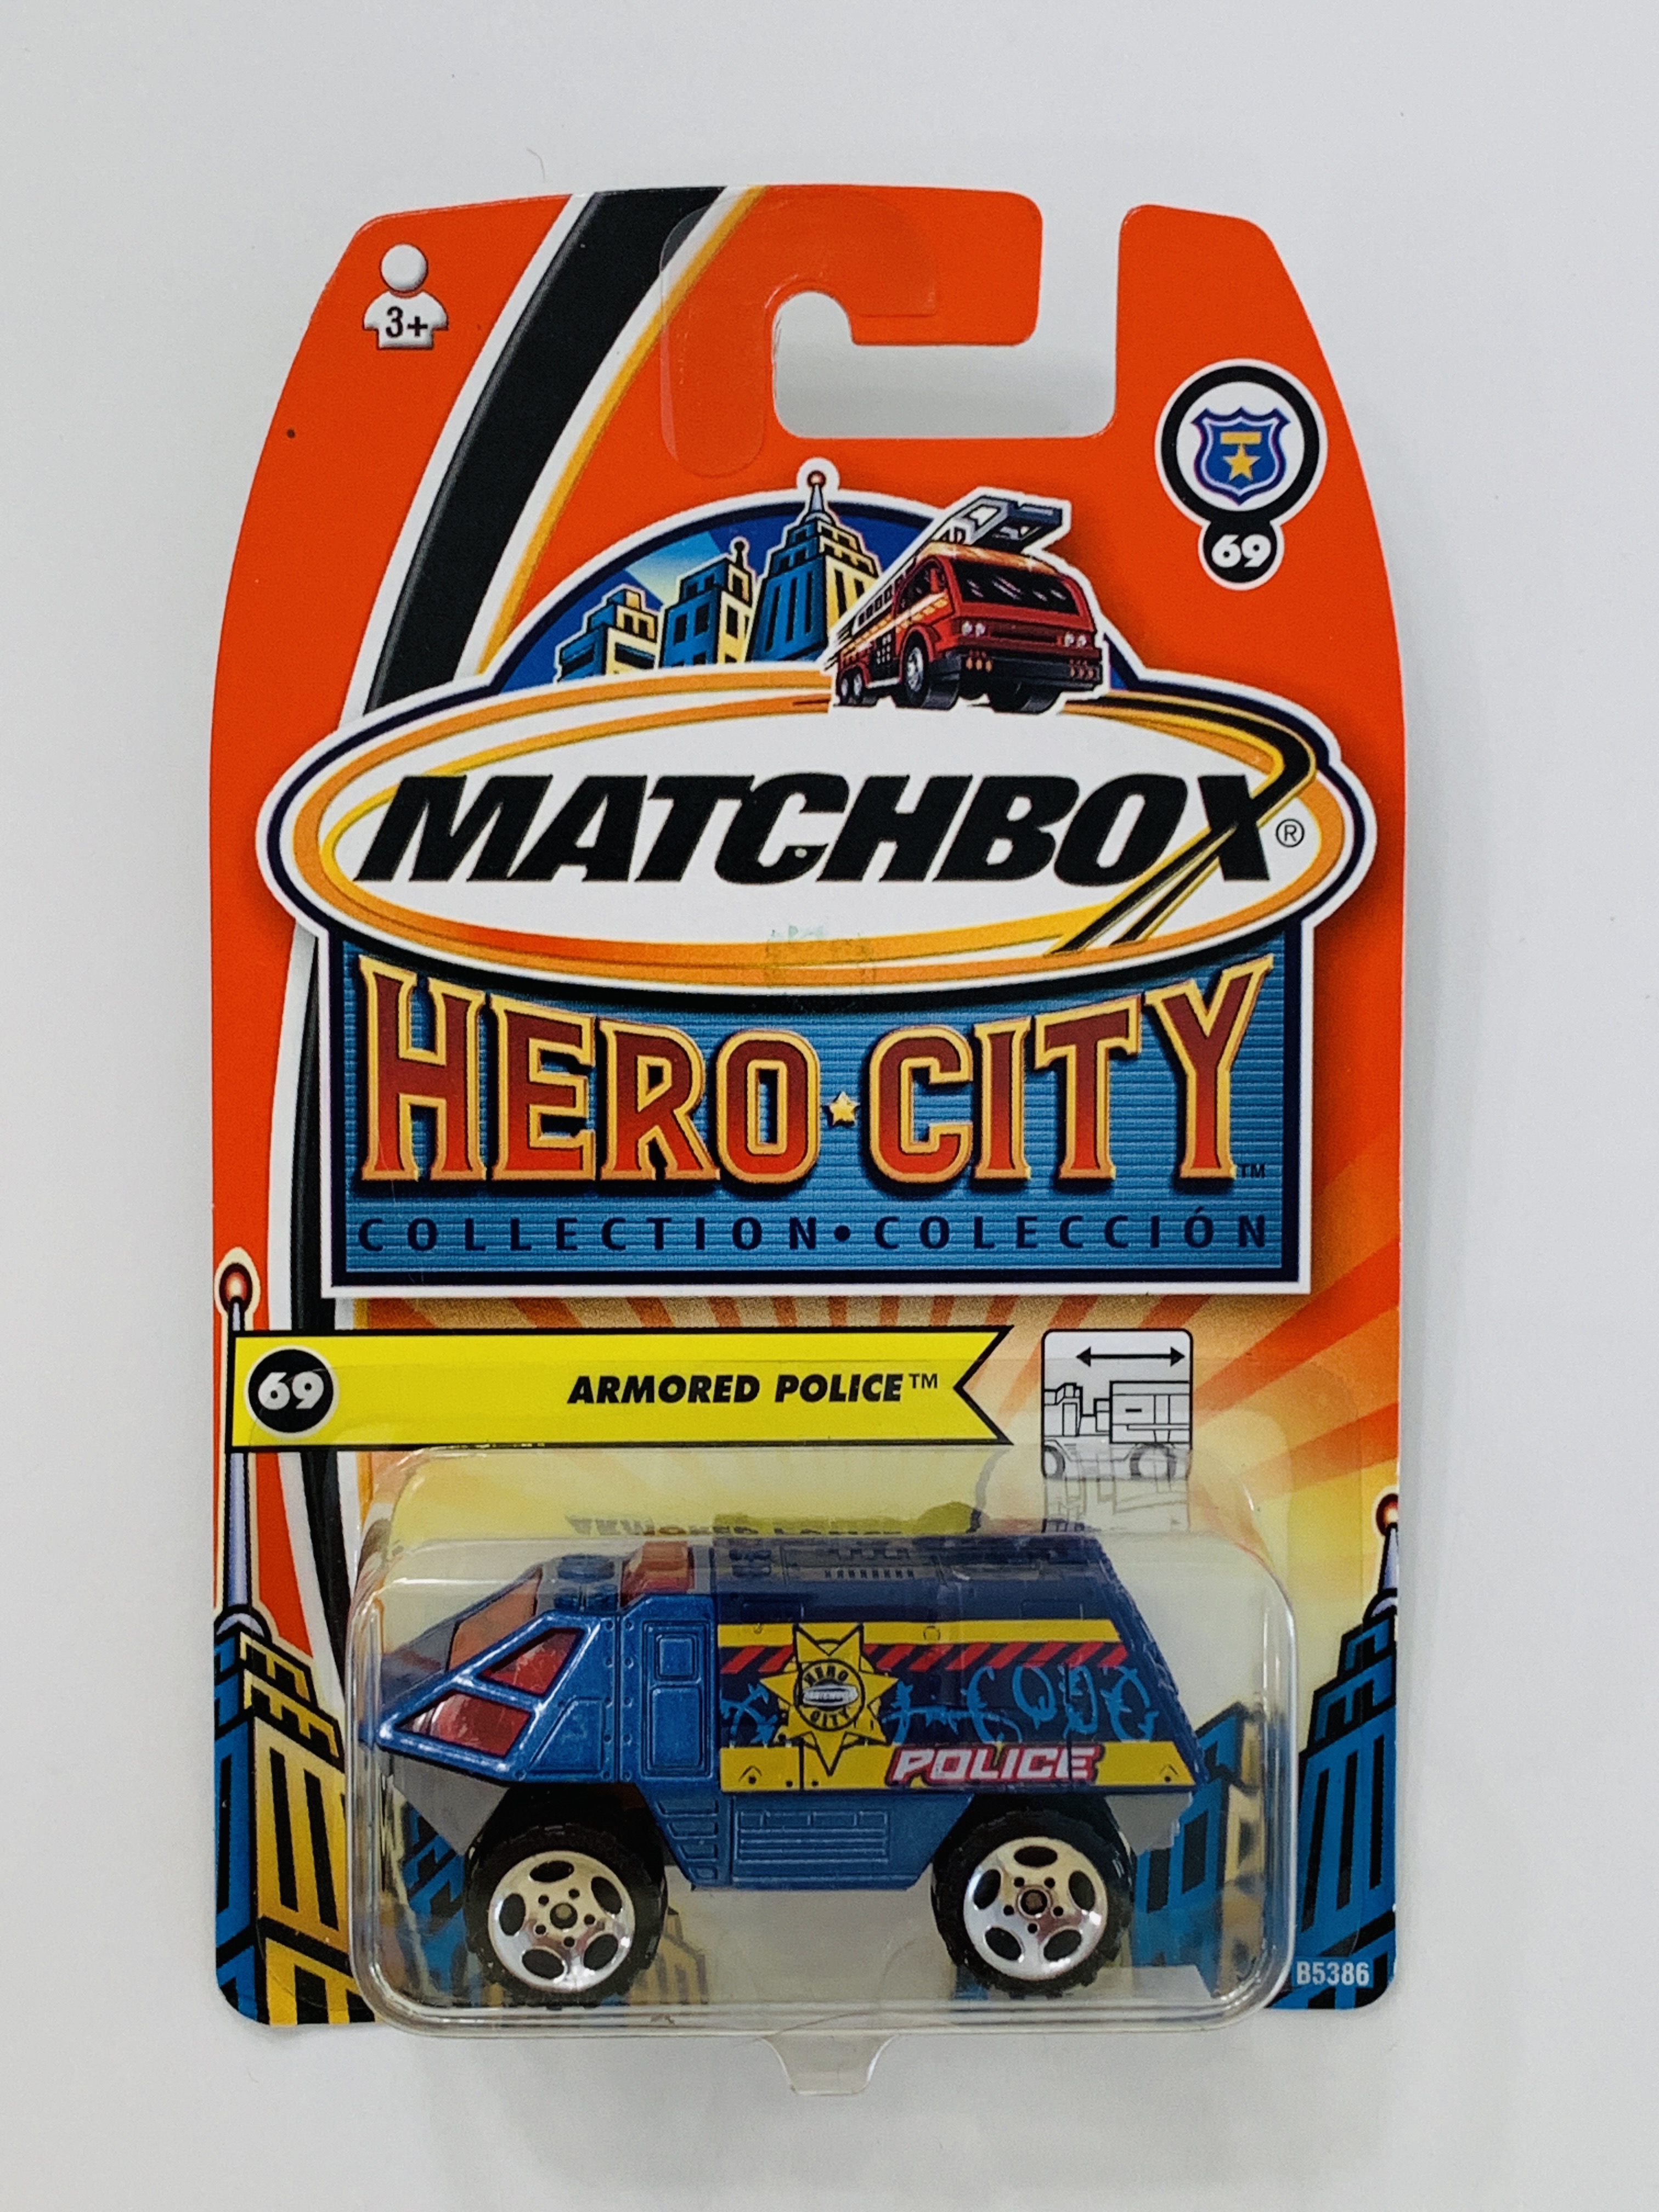 Matchbox Hero City #69 Armored Police